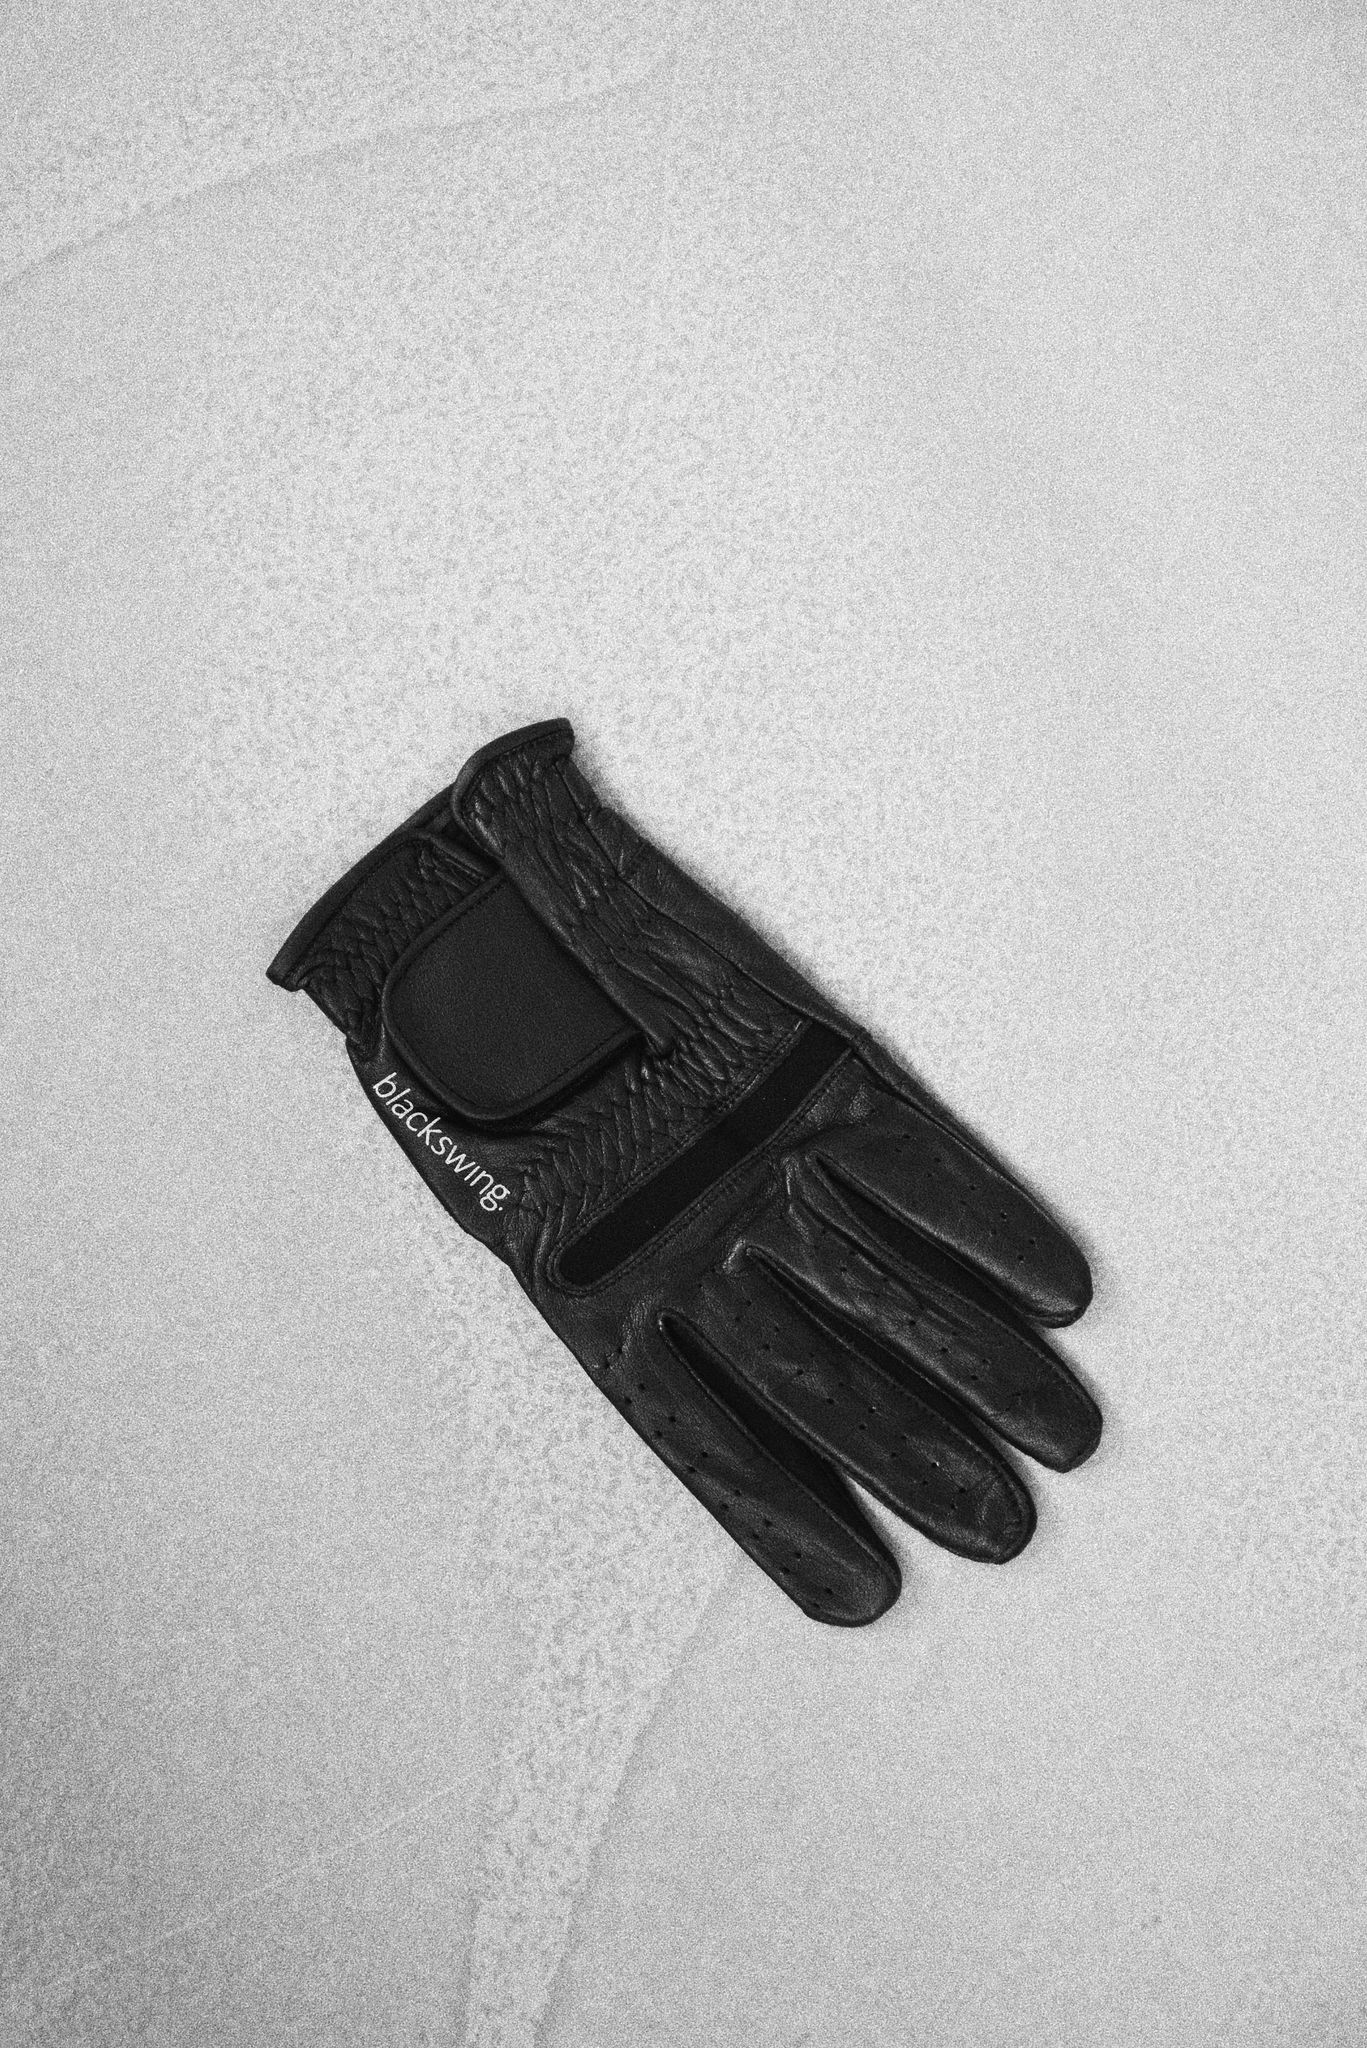 Blackswing Golf glove - golf handske i sver cabretta skinn